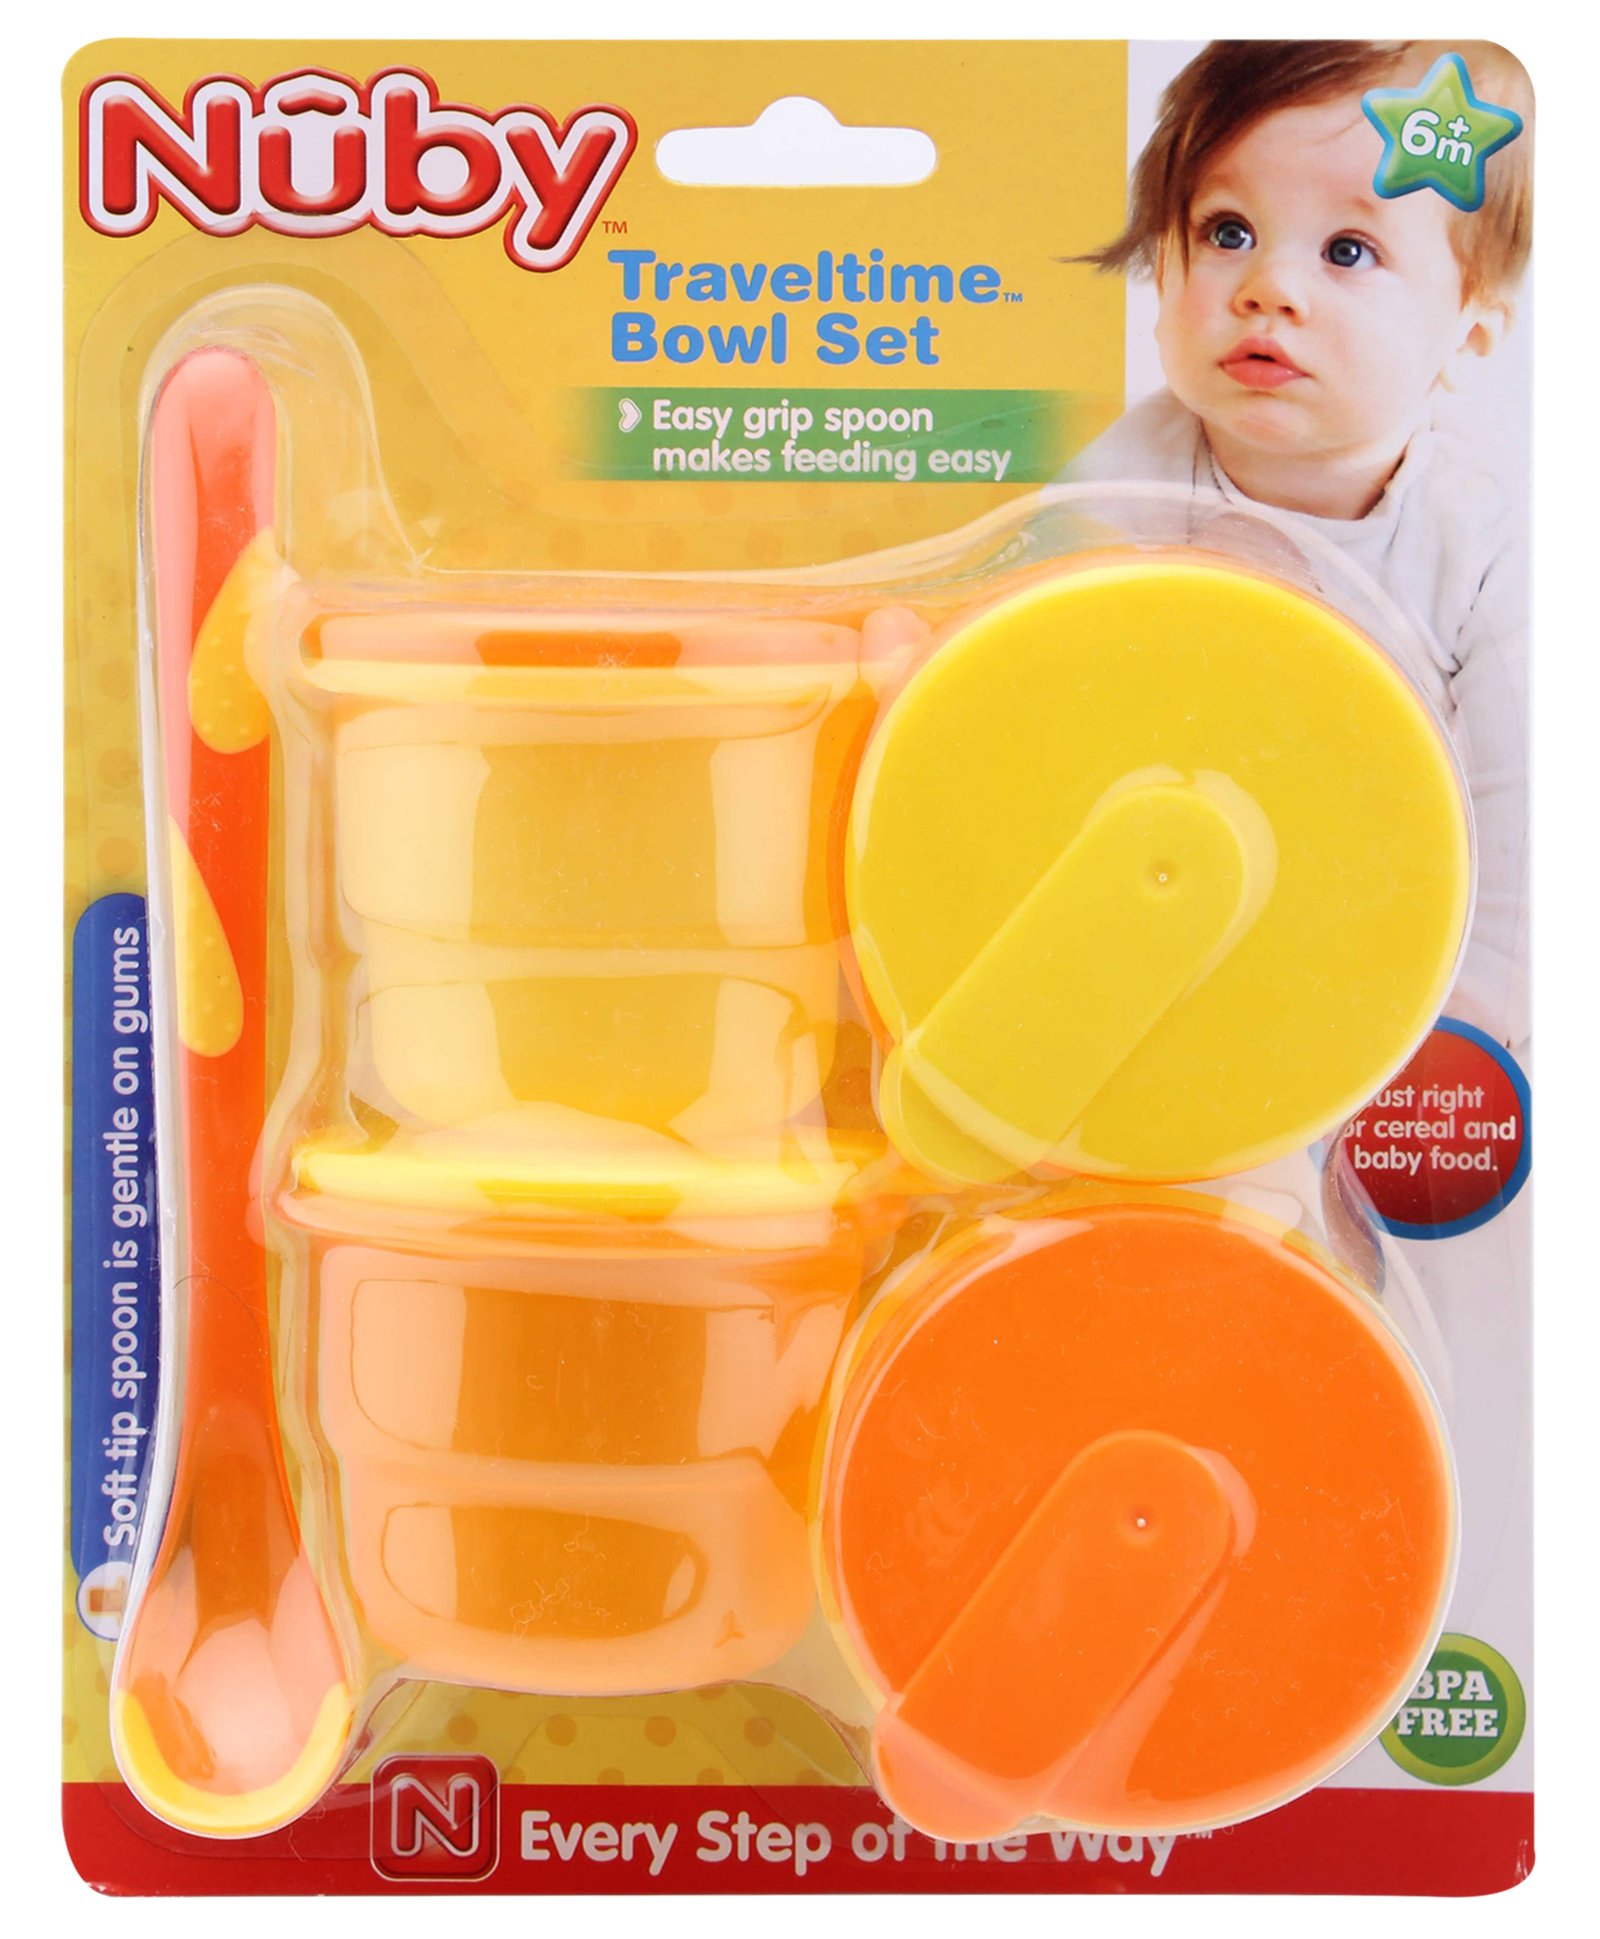 Nuby - Traveltime Bowl Set